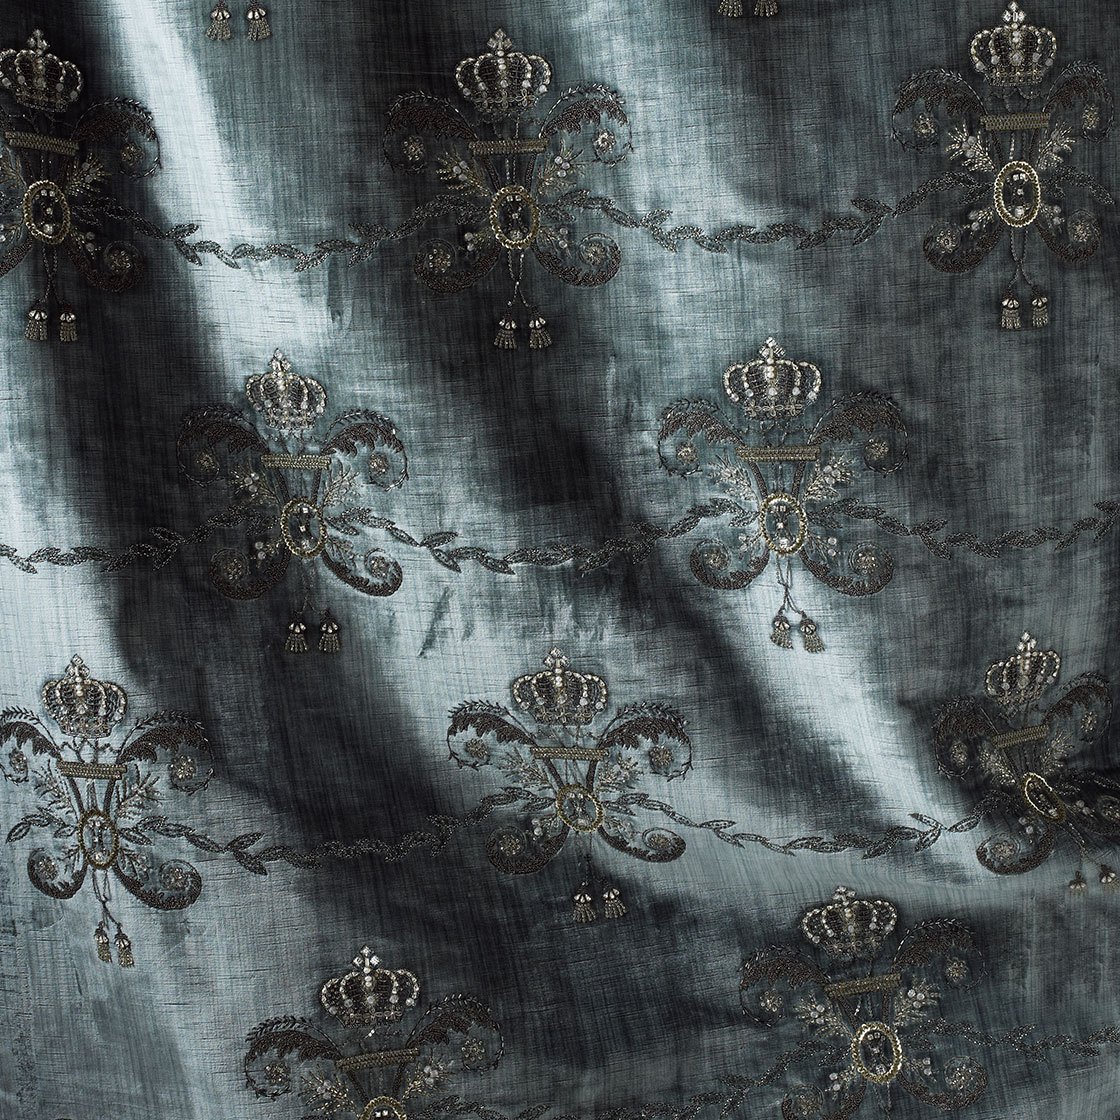 Imperatore - On Imperatore embroidery on Como silk velvet -TealTeal - Beaumont & Fletcher - Beaumont & Fletcher